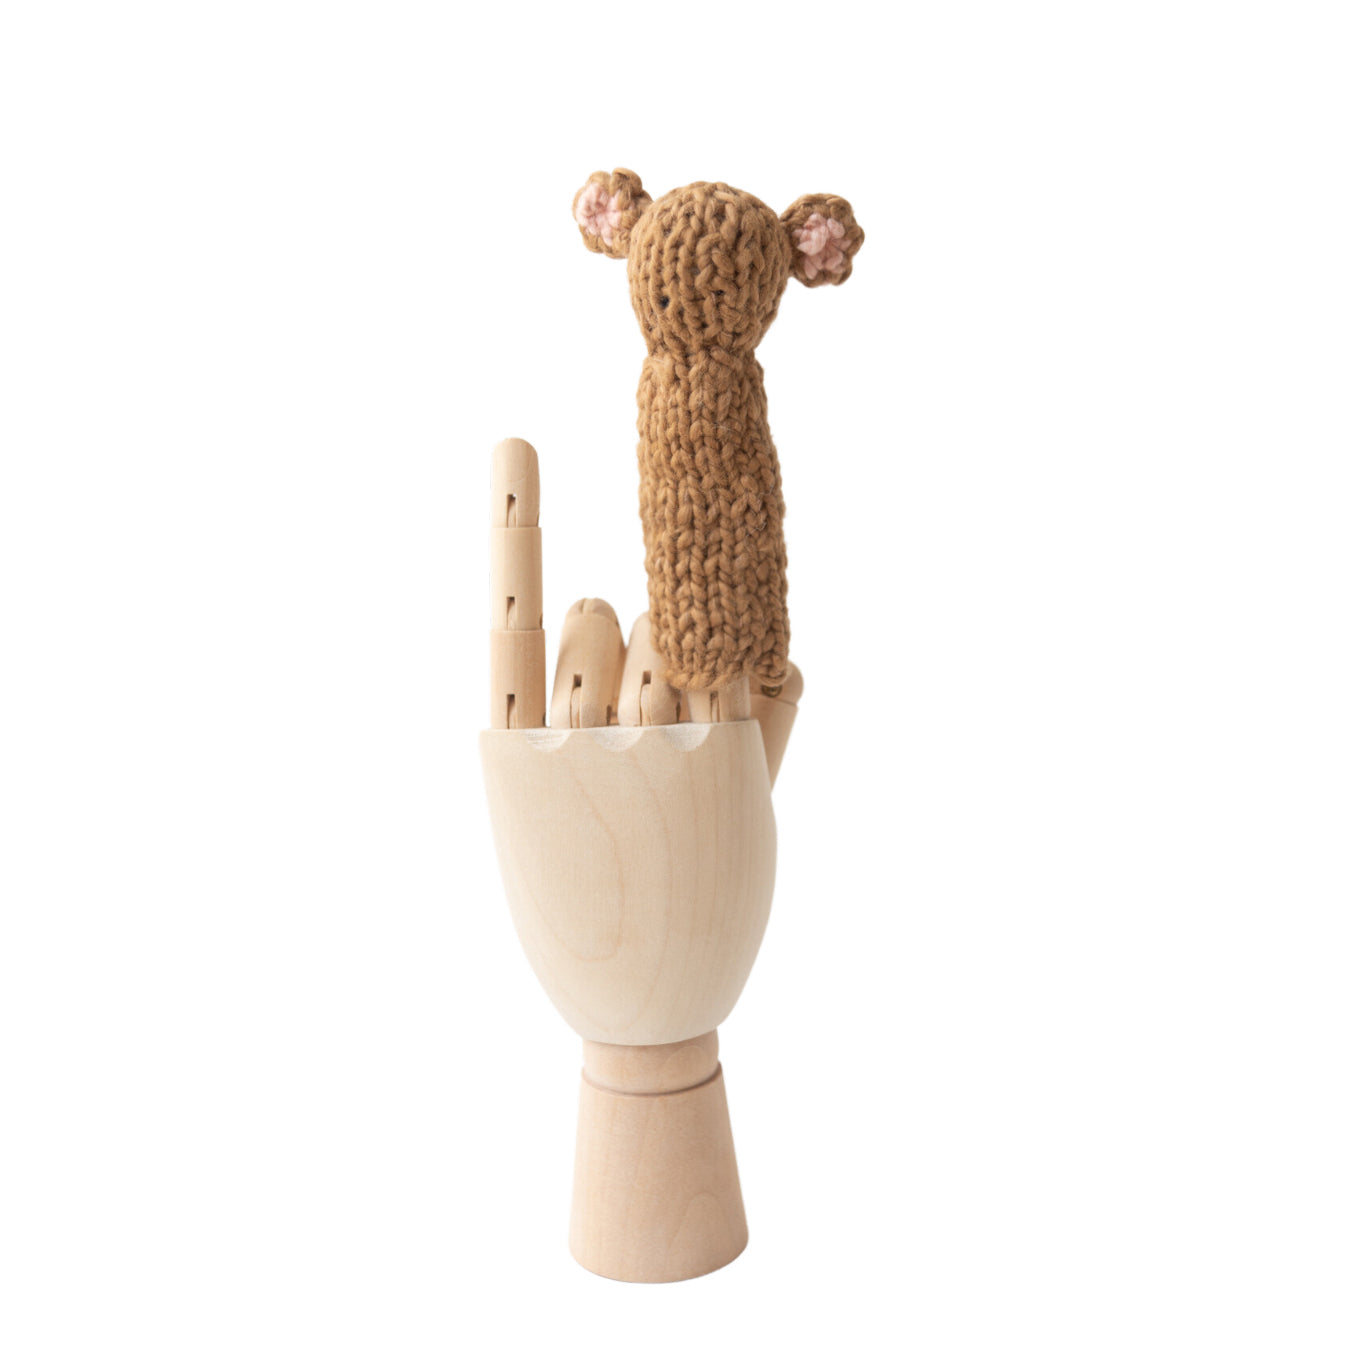 Hand-Knit Finger Puppet Set - Safari